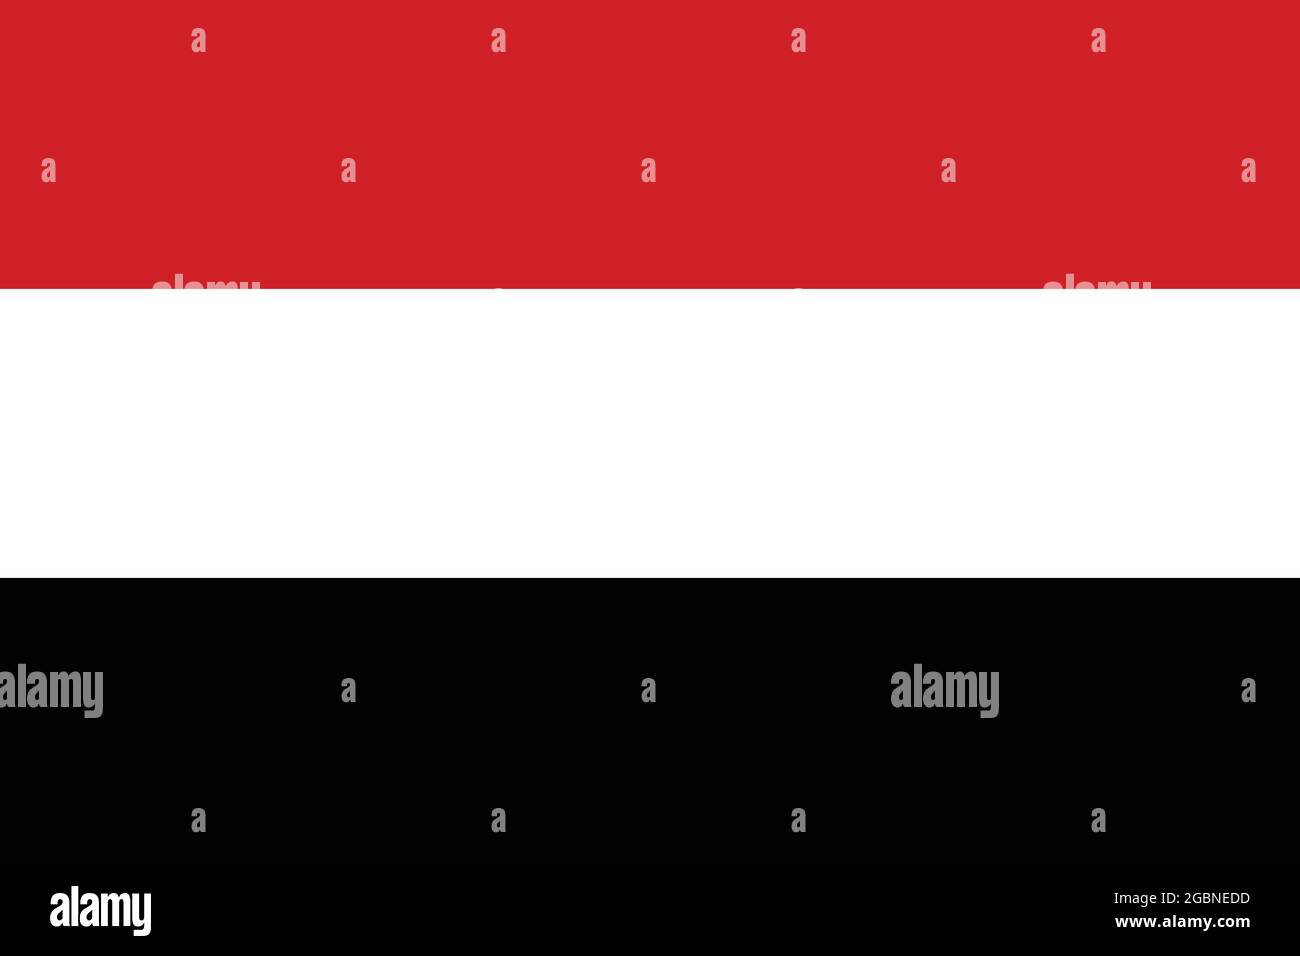 Nationalflagge des Jemen Originalgröße und Farben Vektorgrafik, Alam al-Yaman Nordjemen und Südjemen, Flagge der Republik Jemen, Araber Stock Vektor